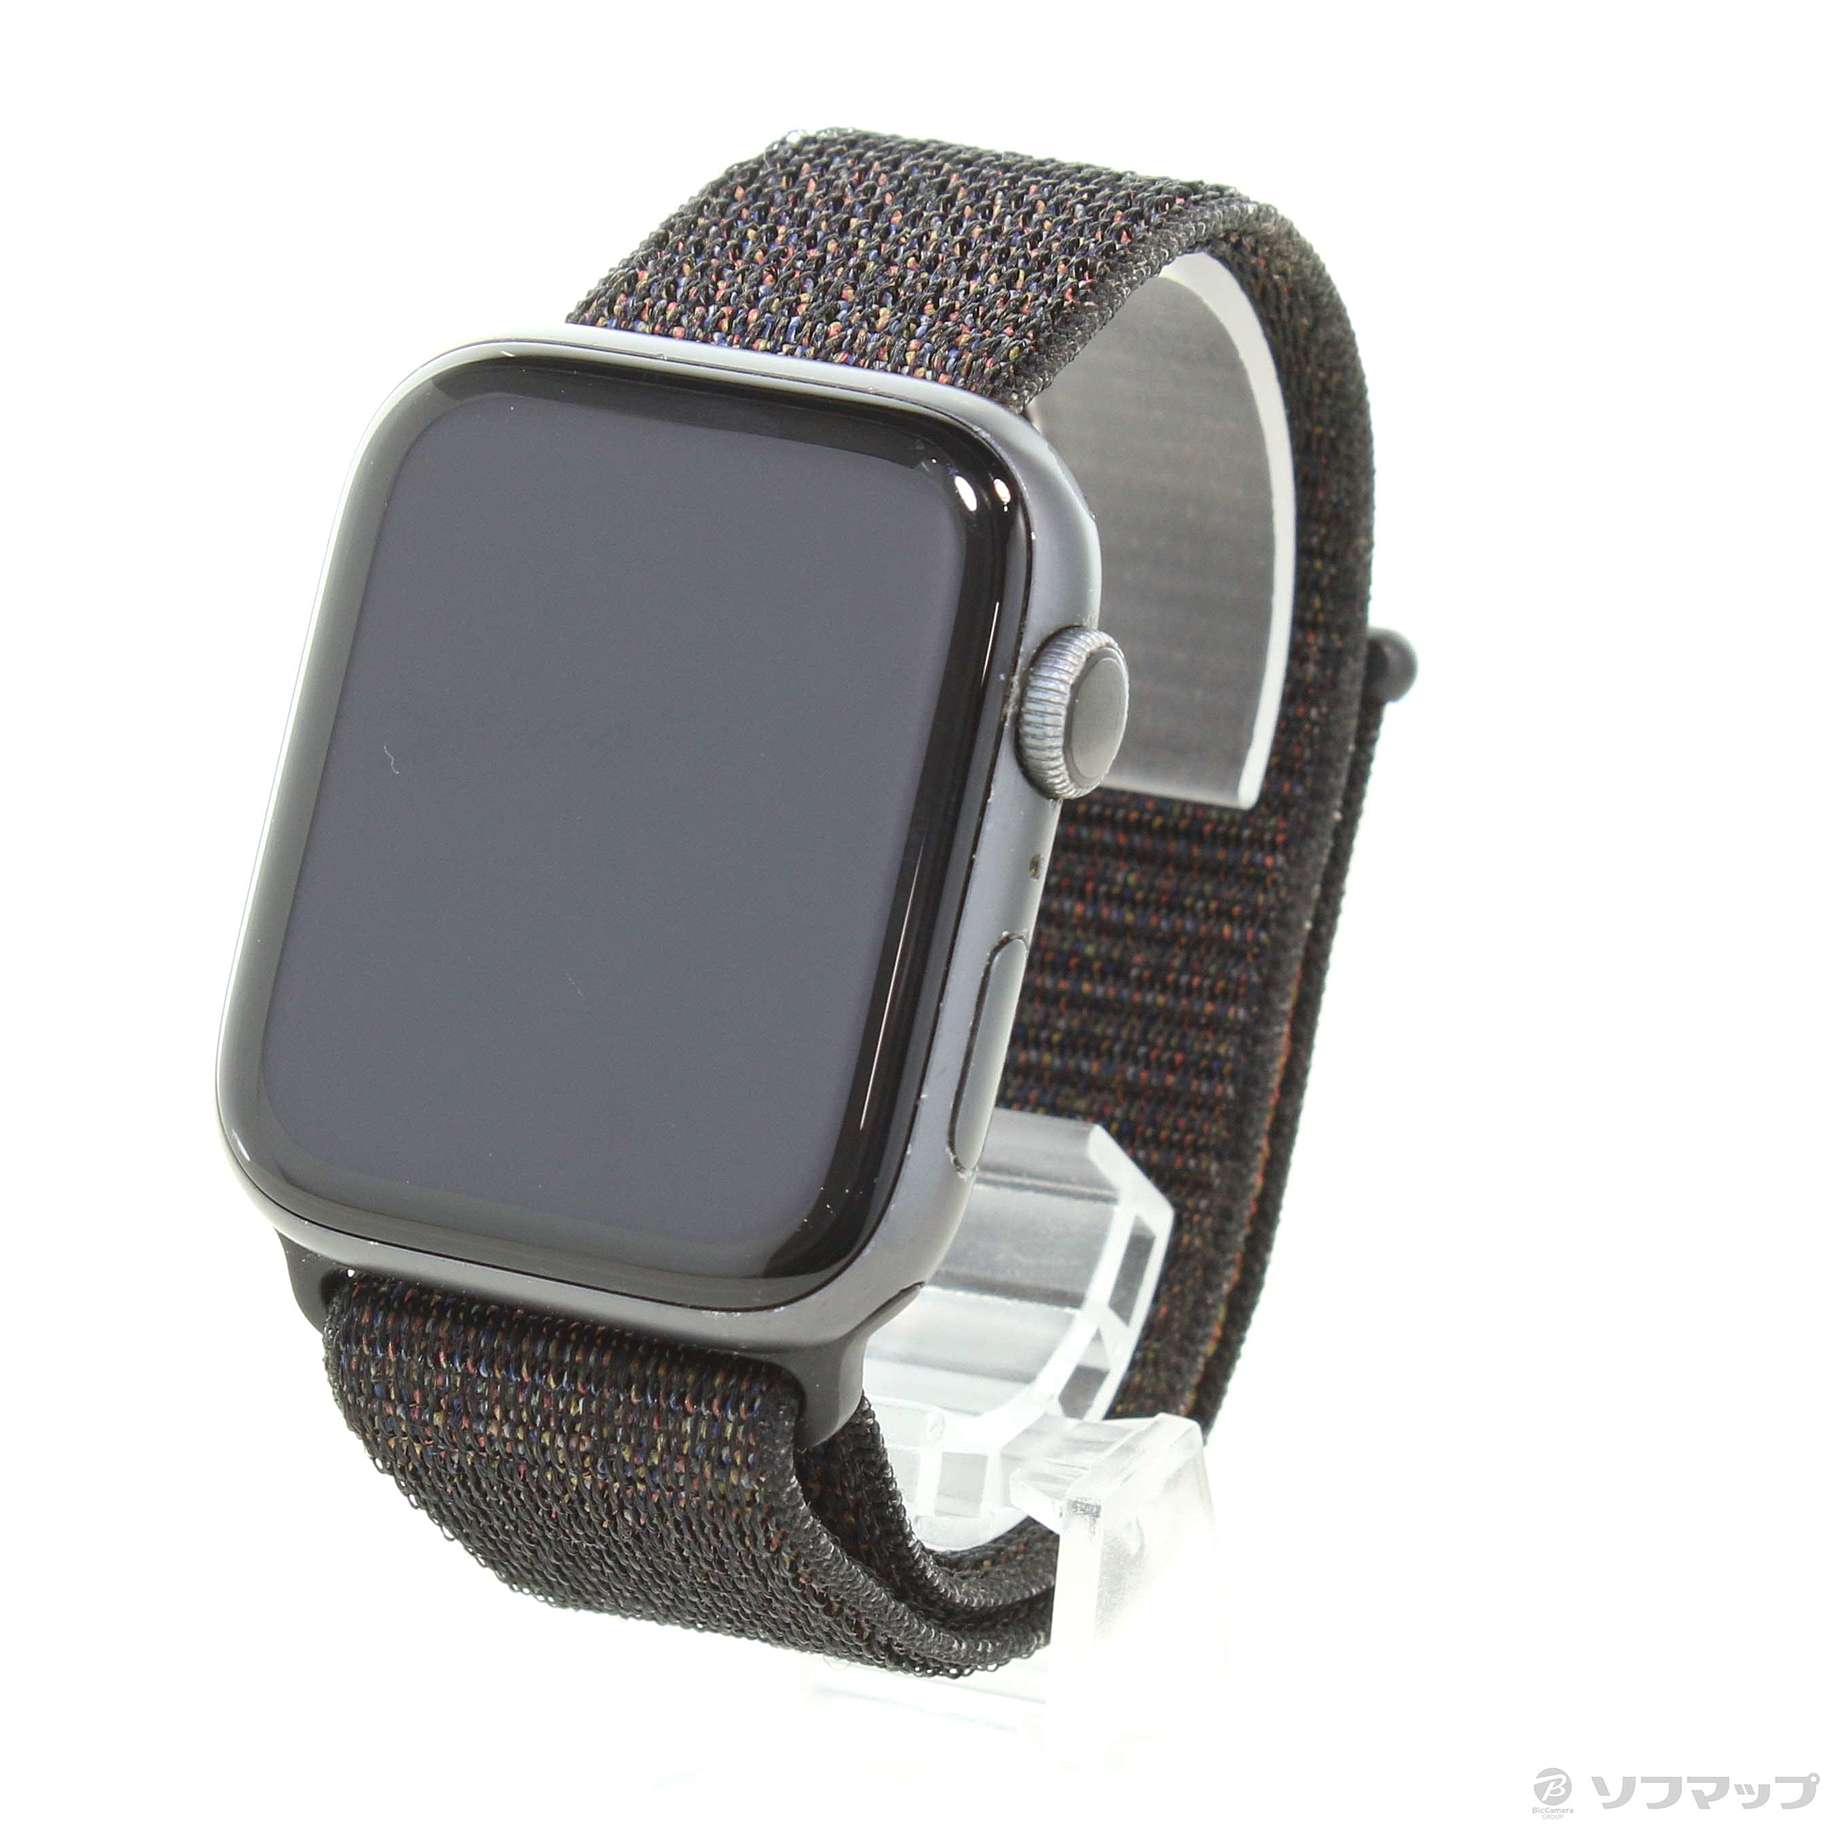 Apple Watch series 4 GPS space gray 44mm